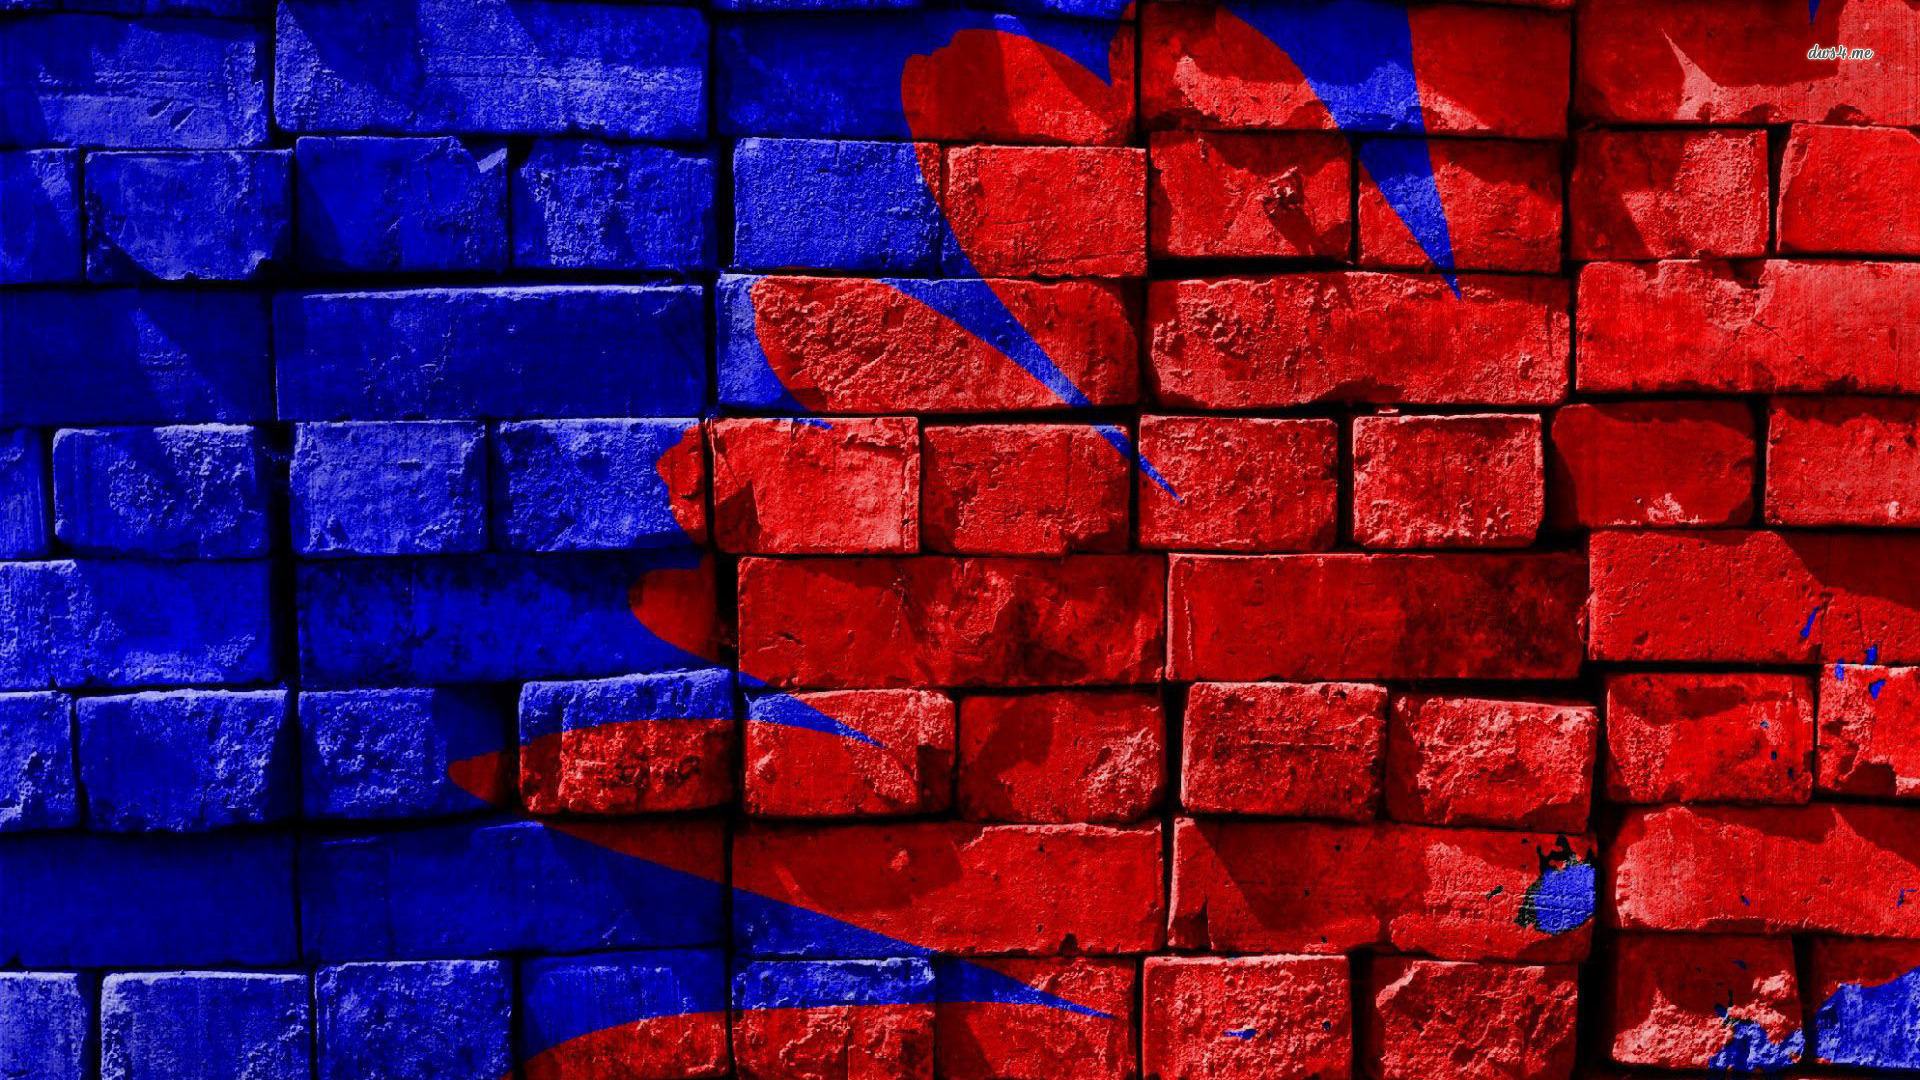 Blue Brick Wall Background Texture of a Brick Wall Stock Image  Image of  background 2020 168221725